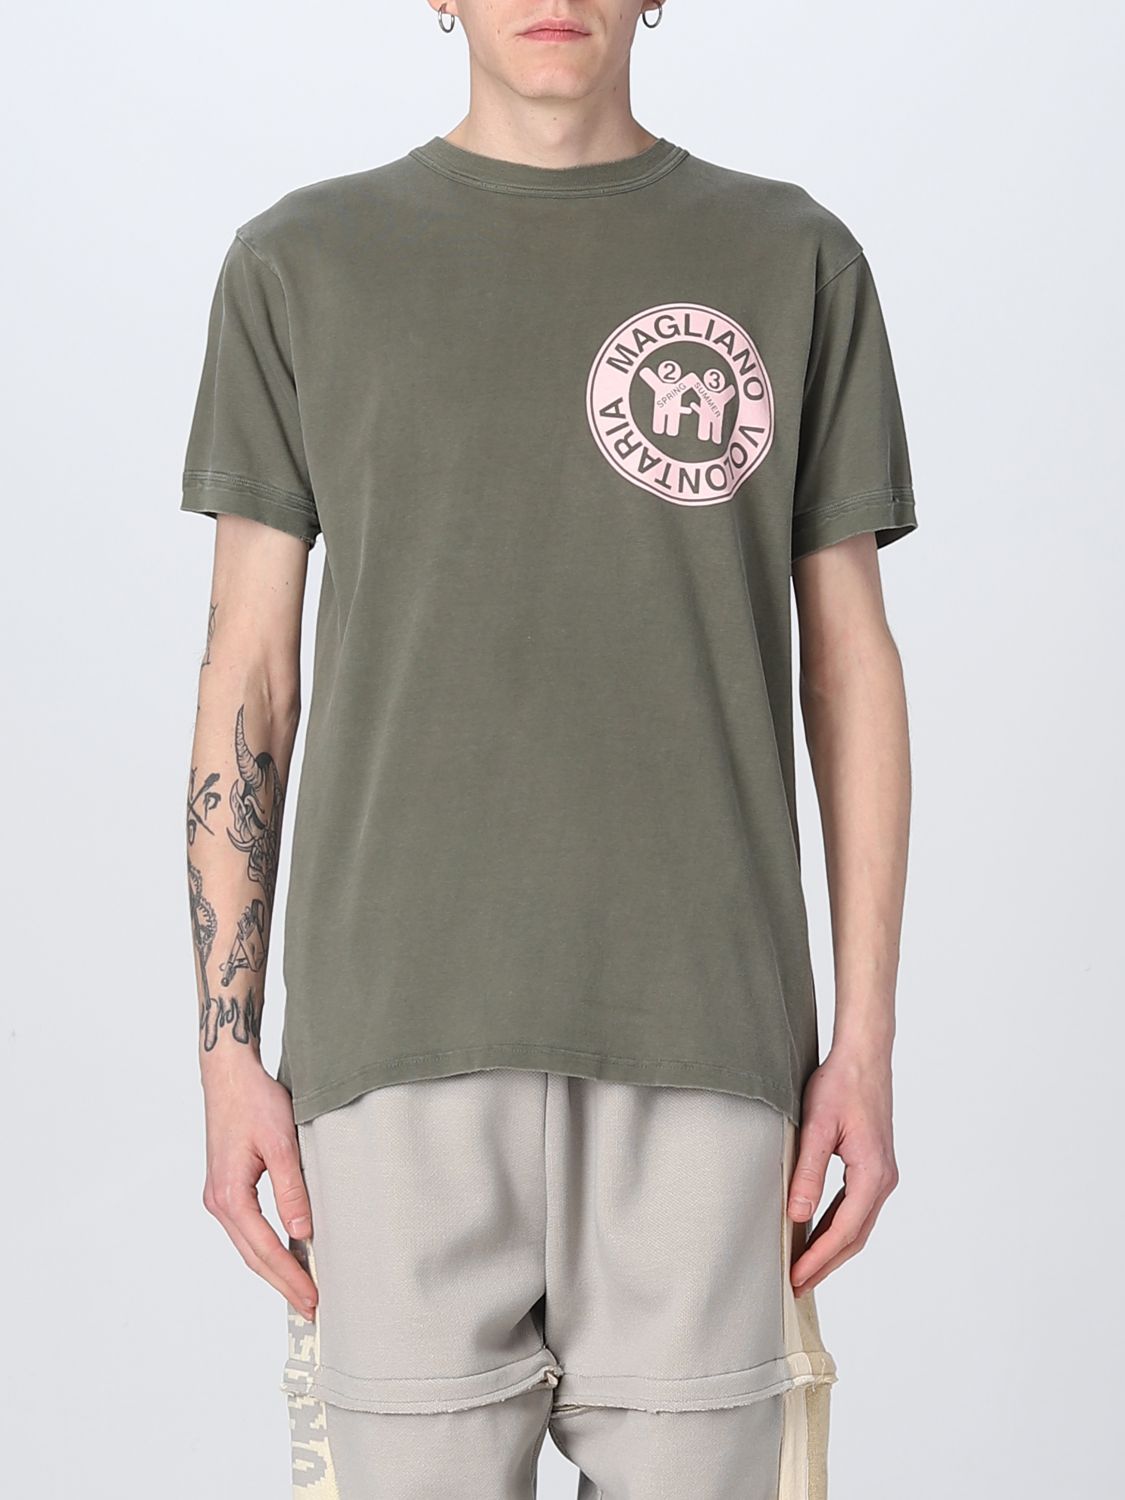 Magliano T-shirt  Men Color Military